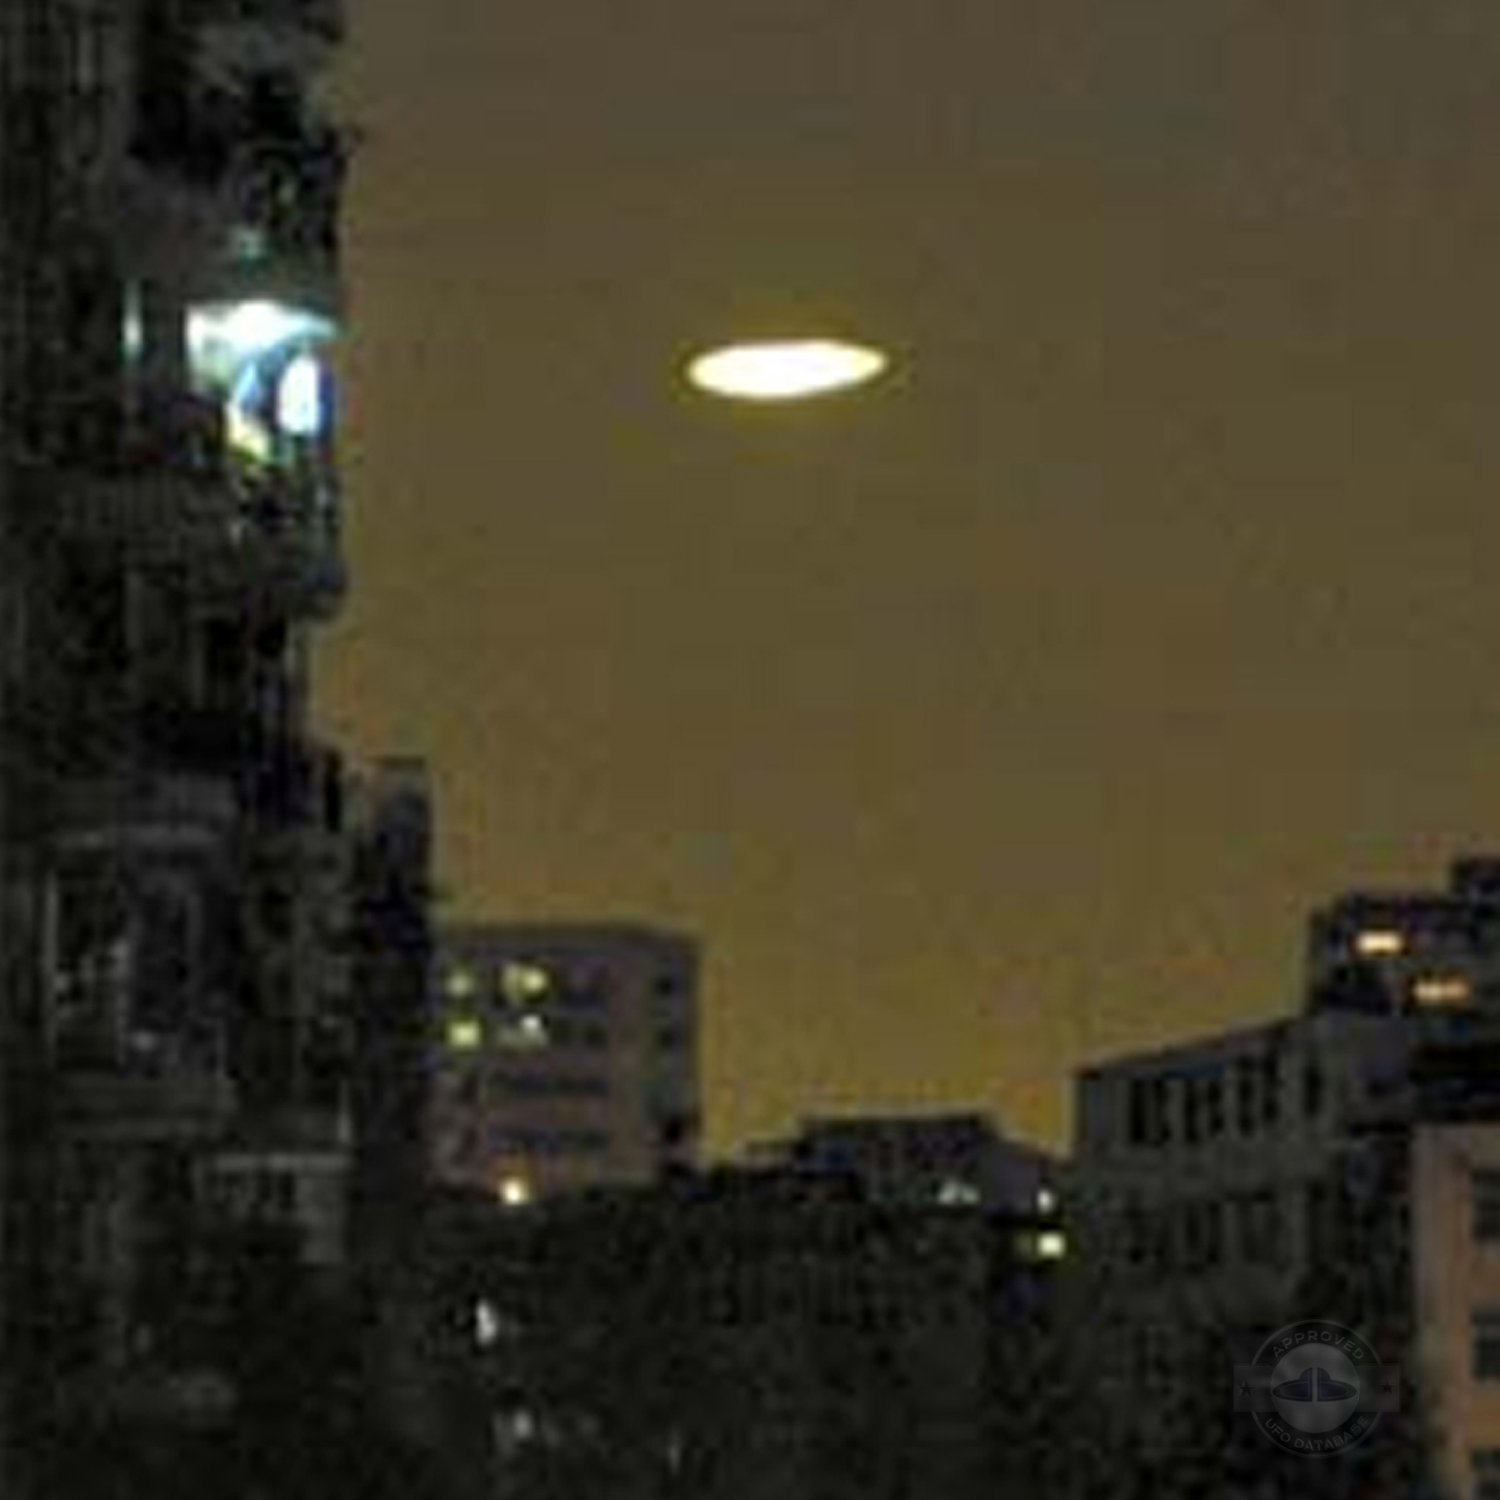 Mass UFO Sighting in Guangzhou, Guangdong | China UFO picture | 2009 UFO Picture #160-3